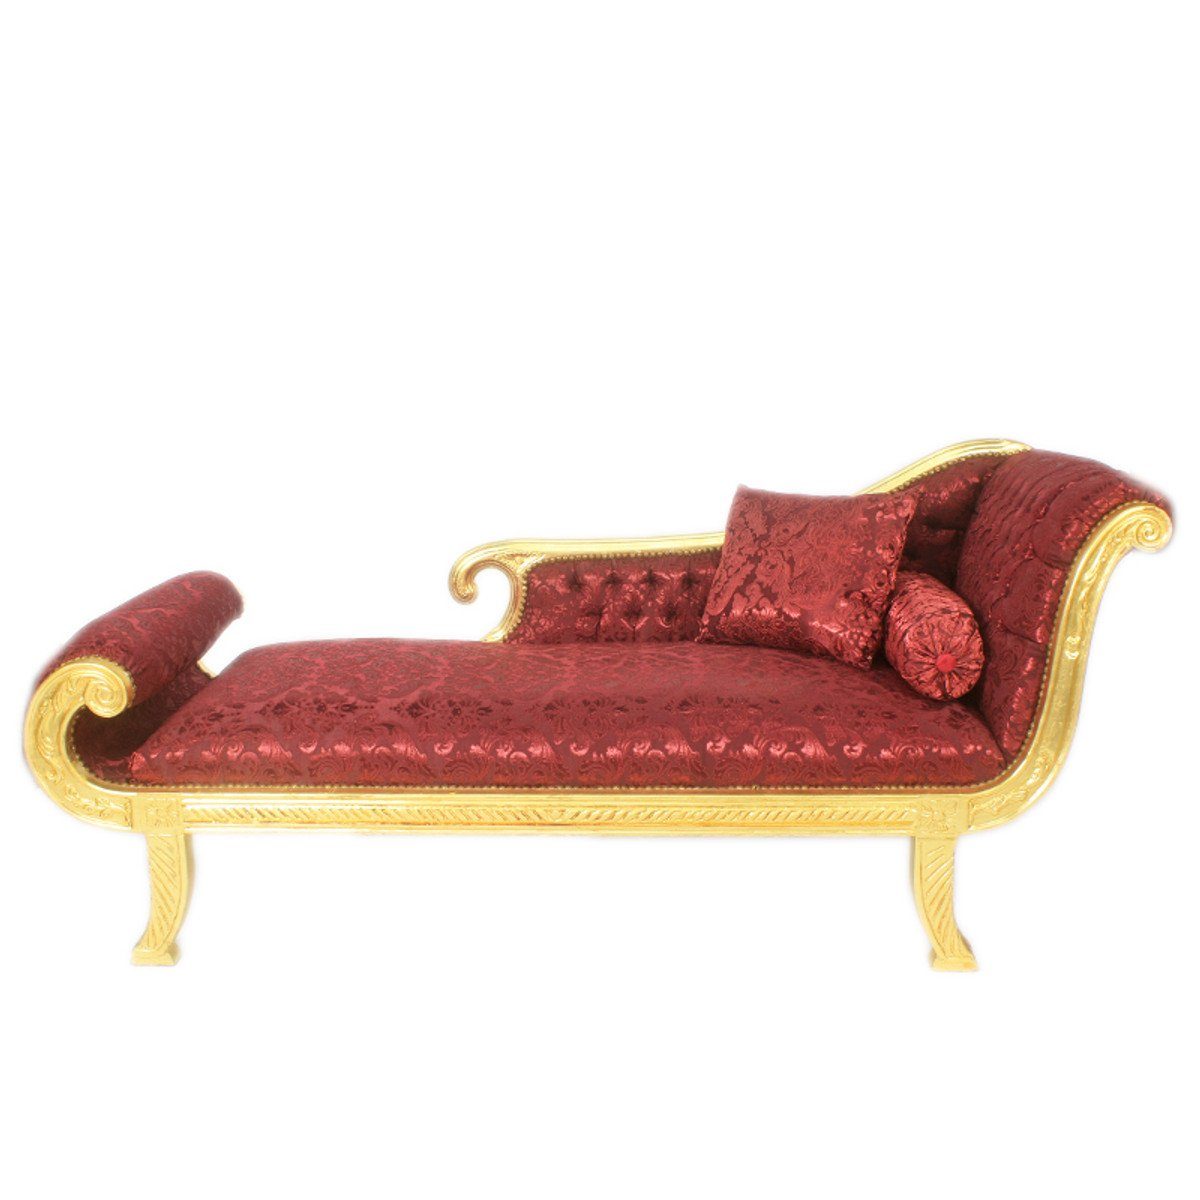 - Casa Recamiere Stil XXL Muster Modell Chaiselongue Rechte - / Bordeaux Seite Antik Wohnzimmer Barock Chaiselongue Gold Padrino Möbel